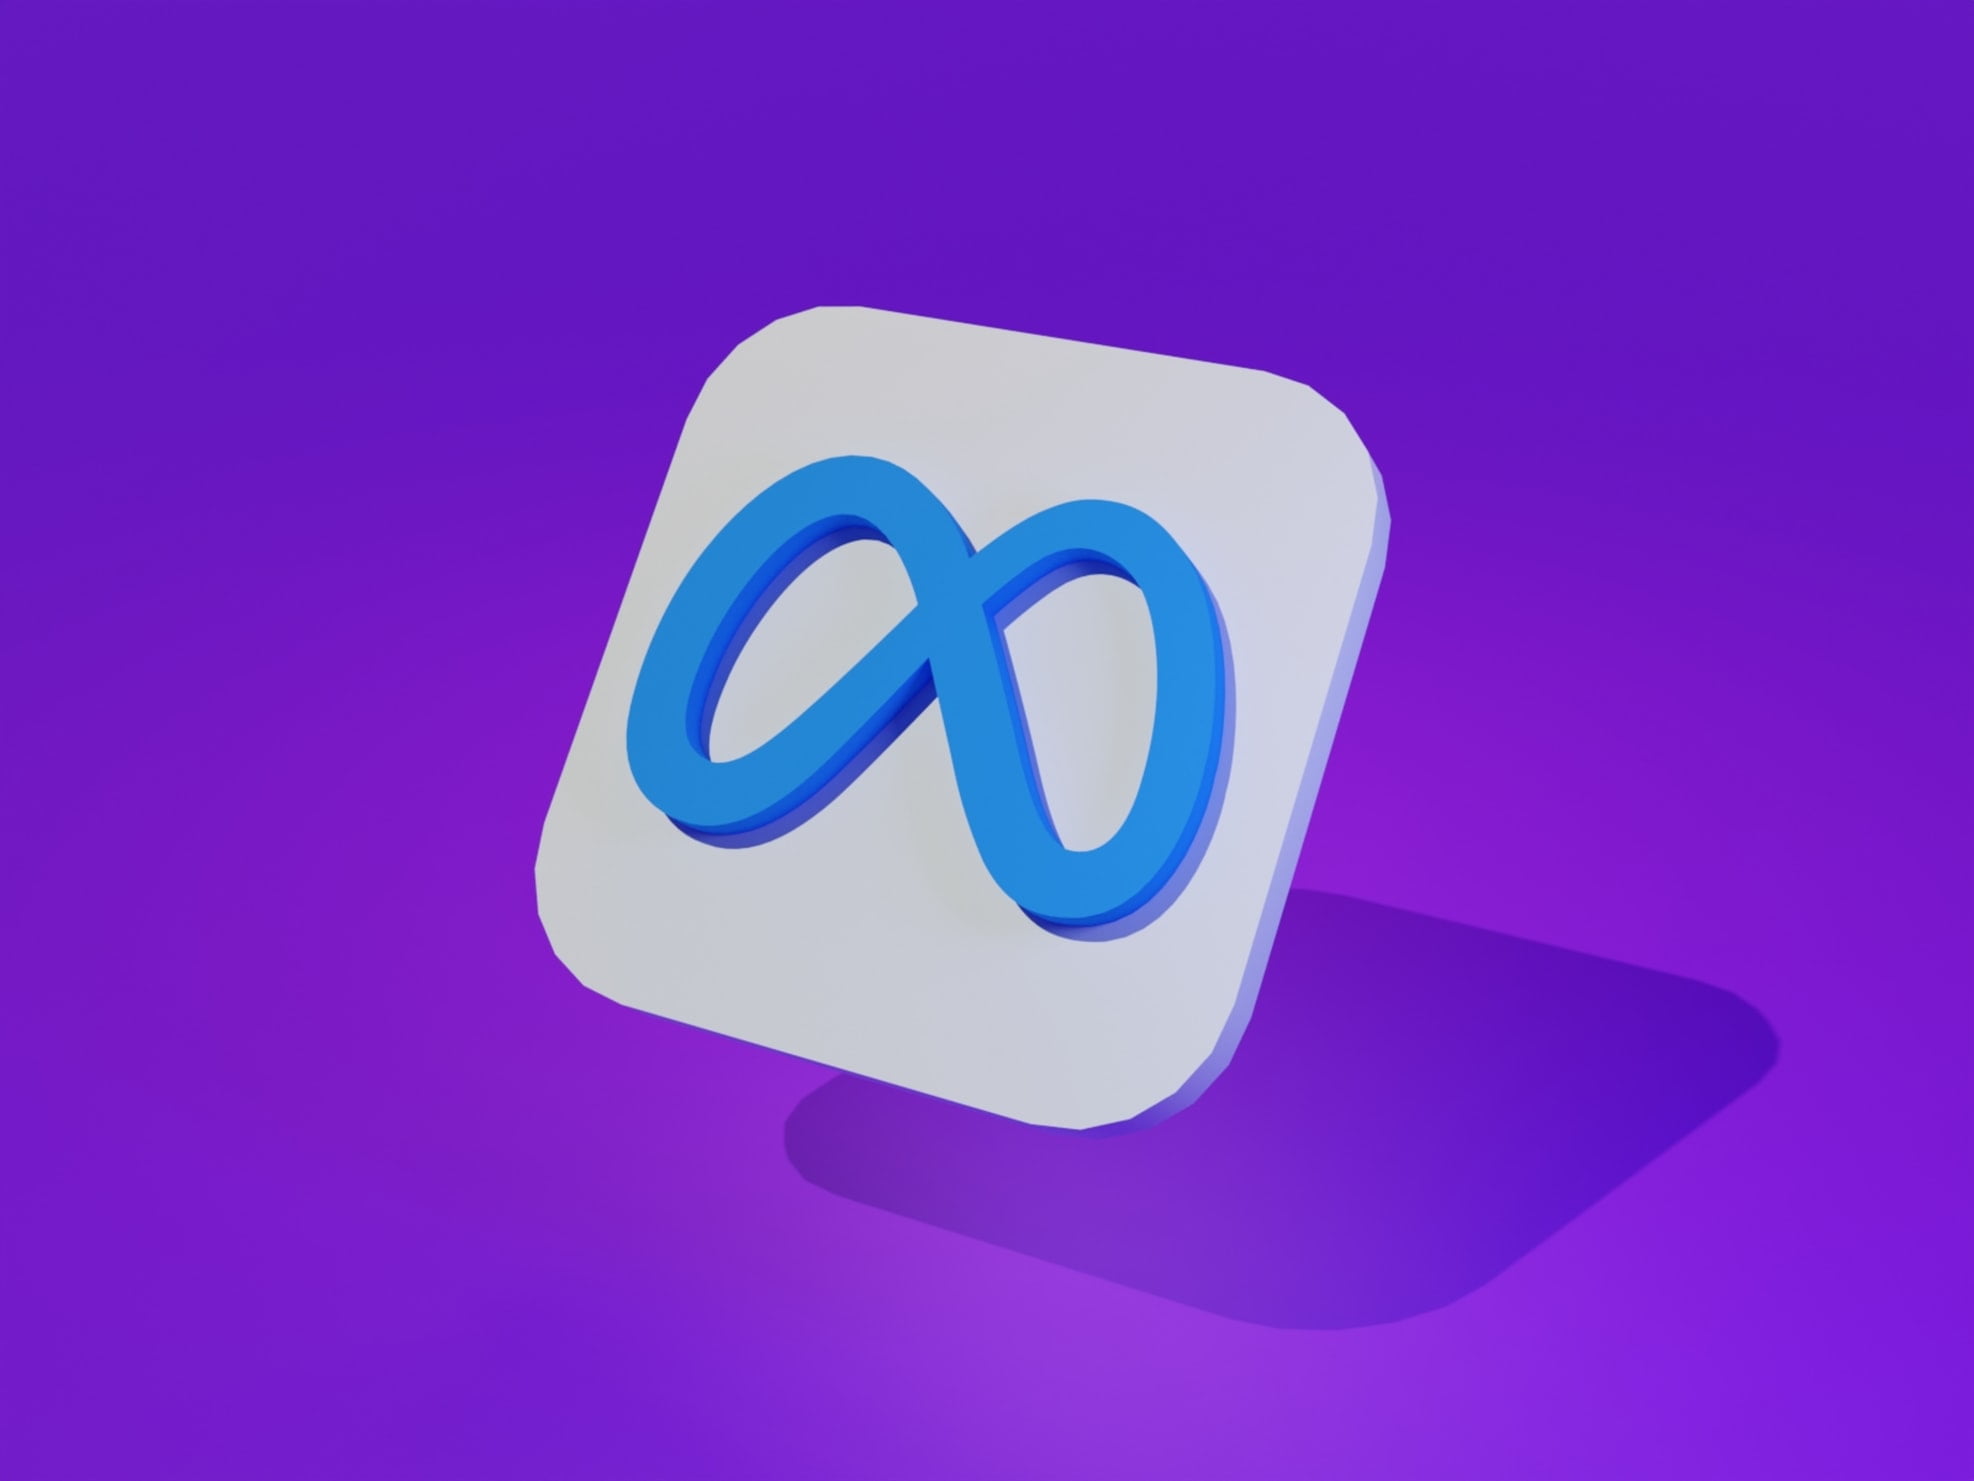 3D meta logo against a purple background